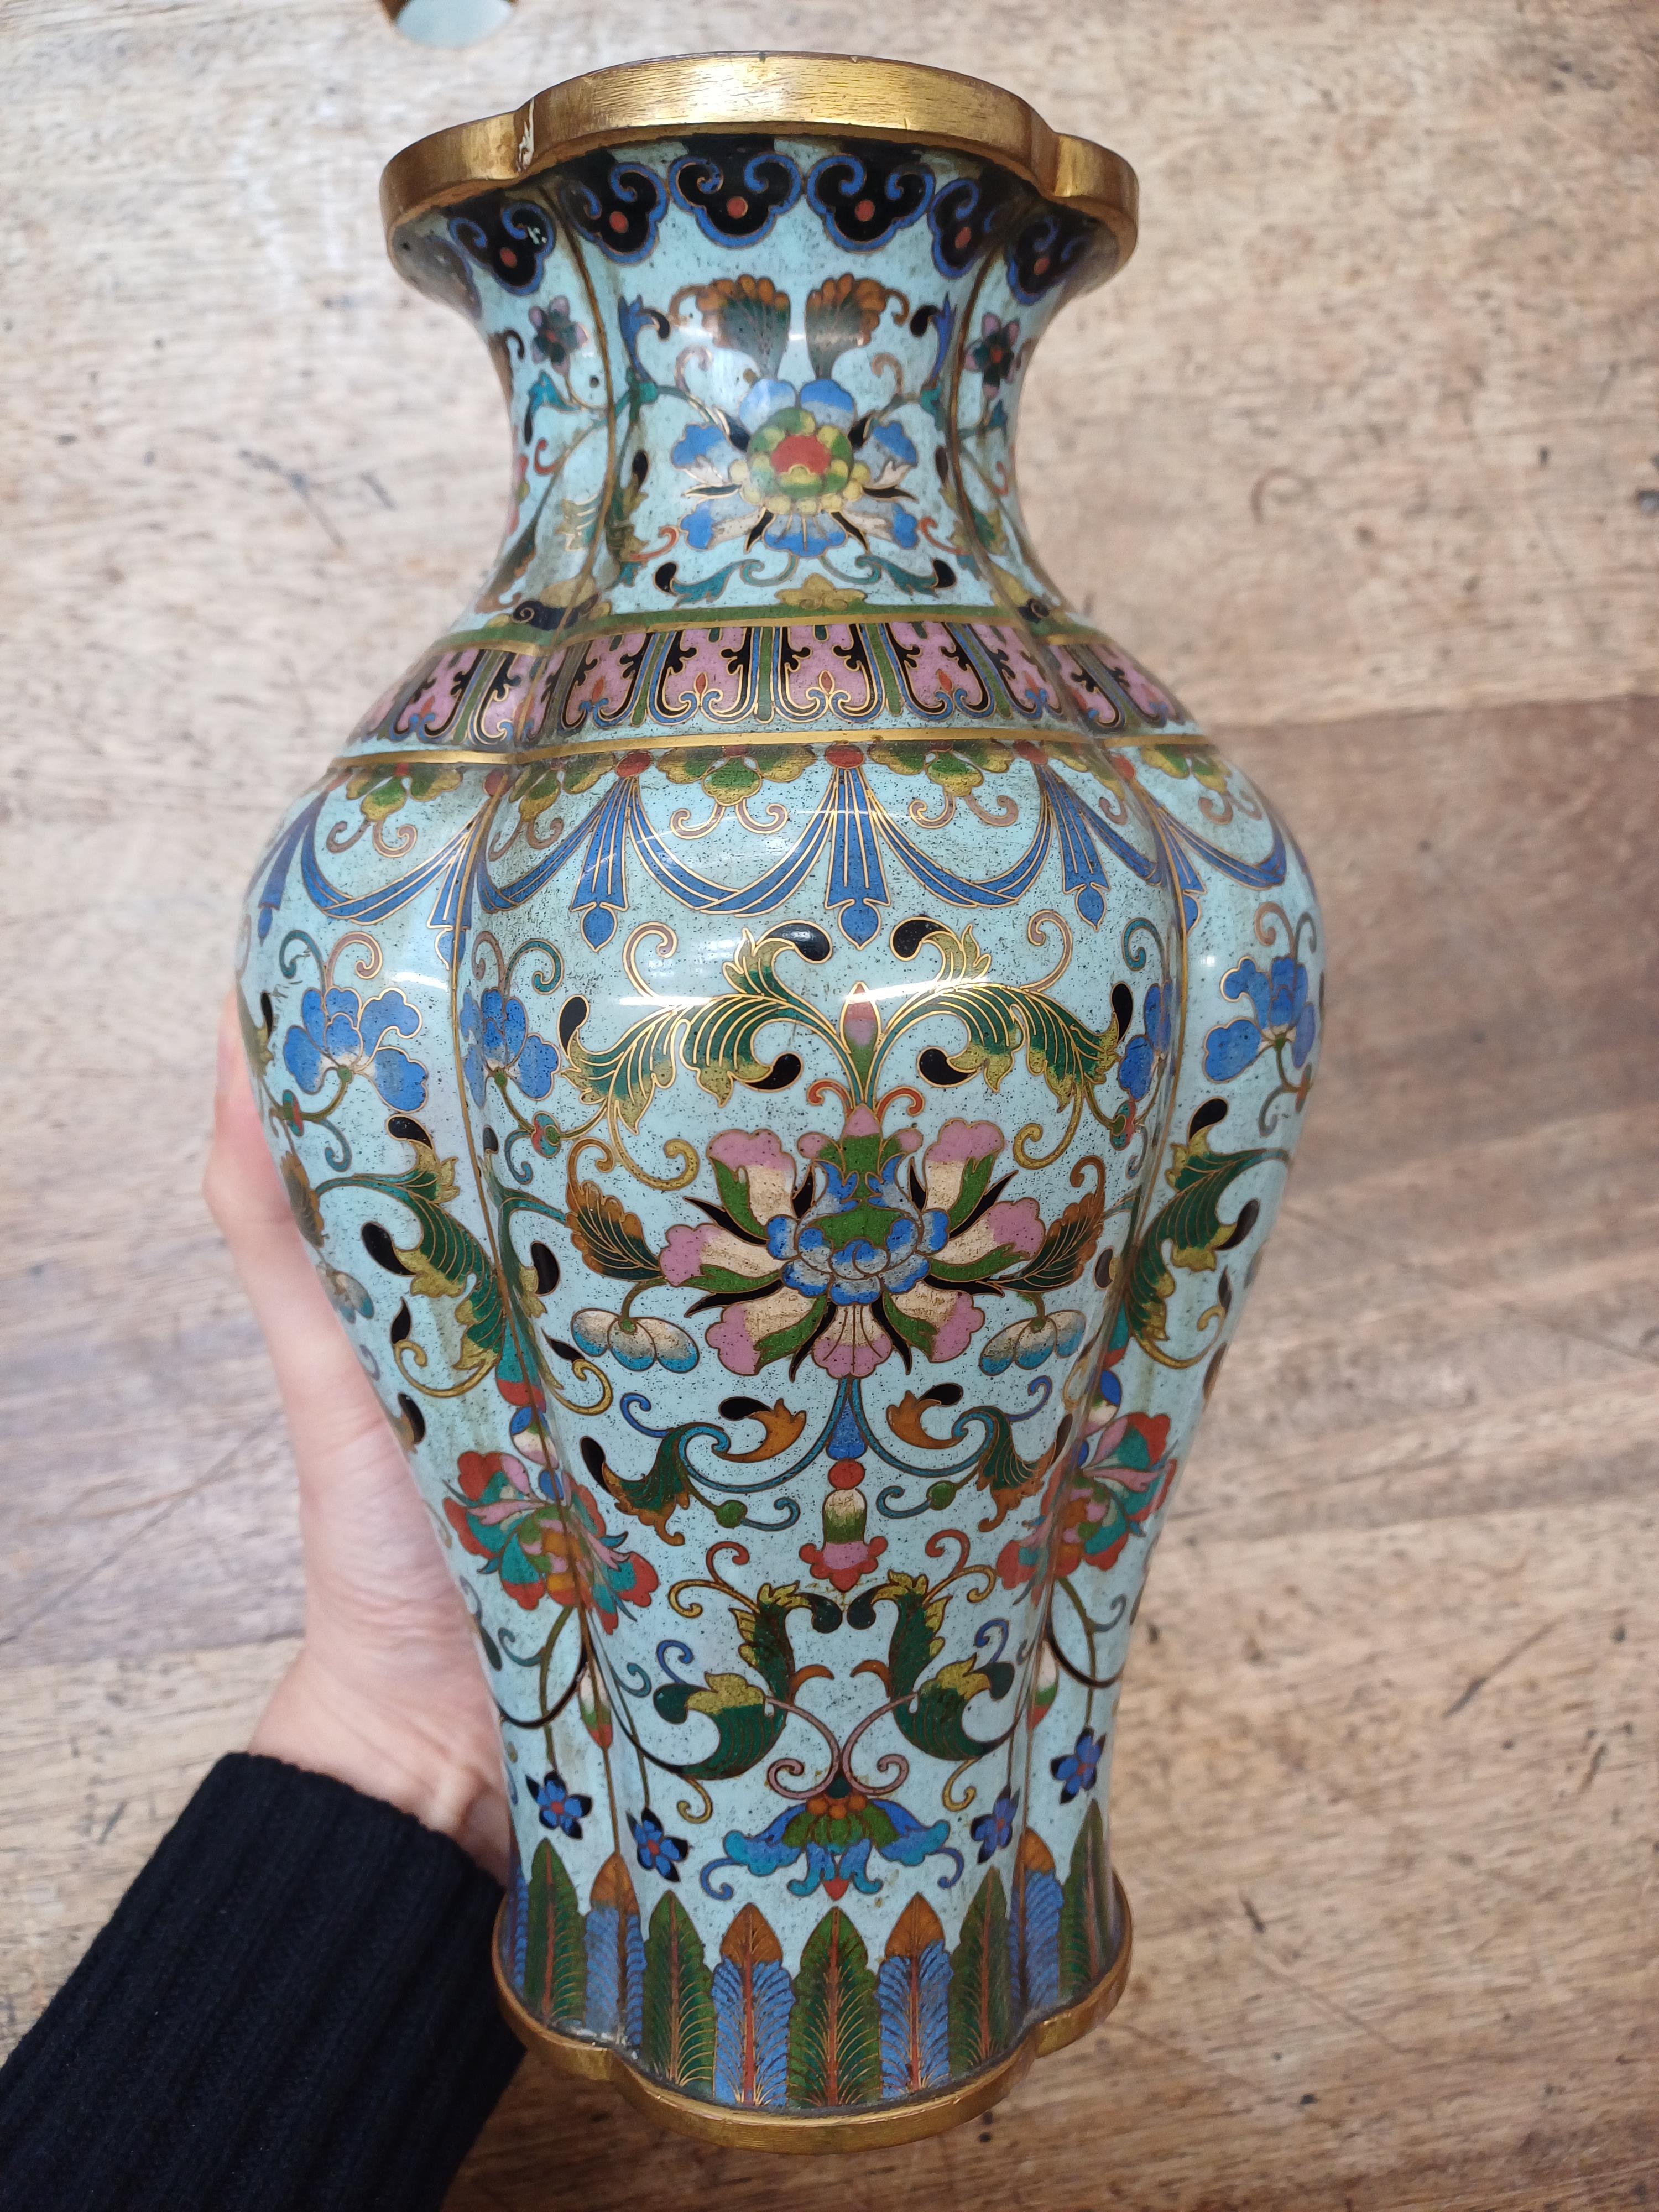 A PAIR OF CHINESE CLOISONNÉ ENAMEL VASES 清十八世紀 銅胎掐絲琺瑯番蓮紋瓶一對 - Image 4 of 17